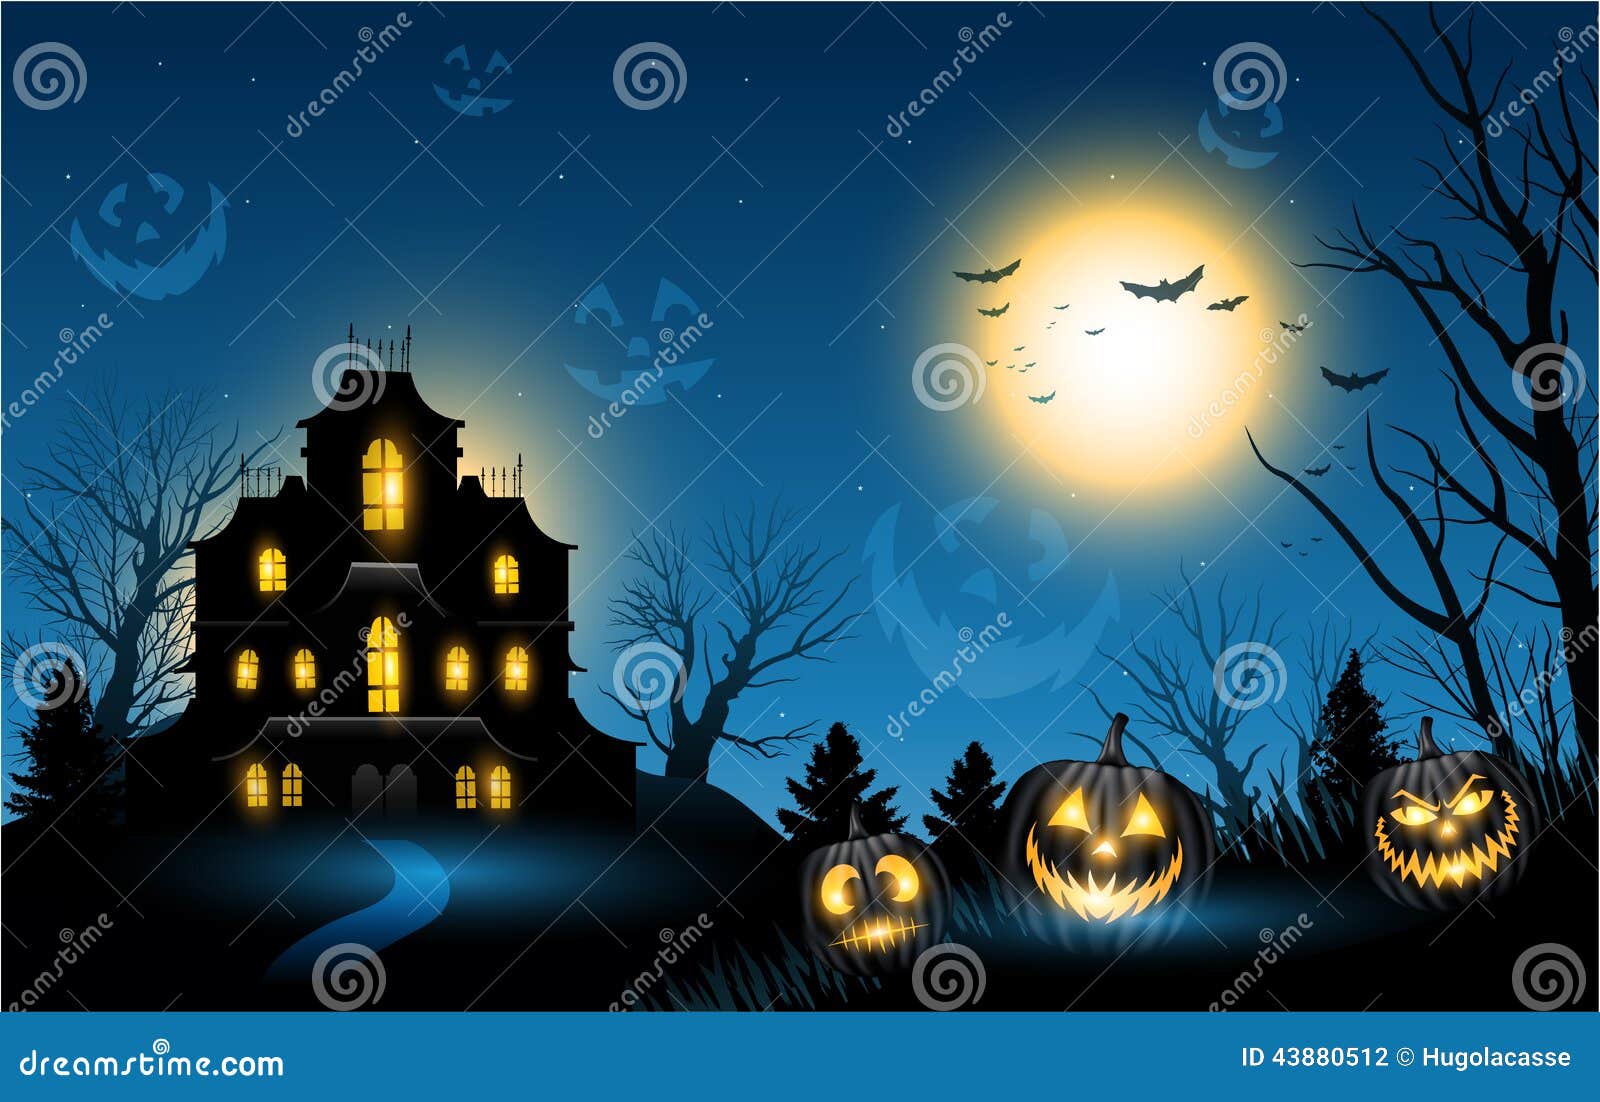 halloween haunted house copyspace background